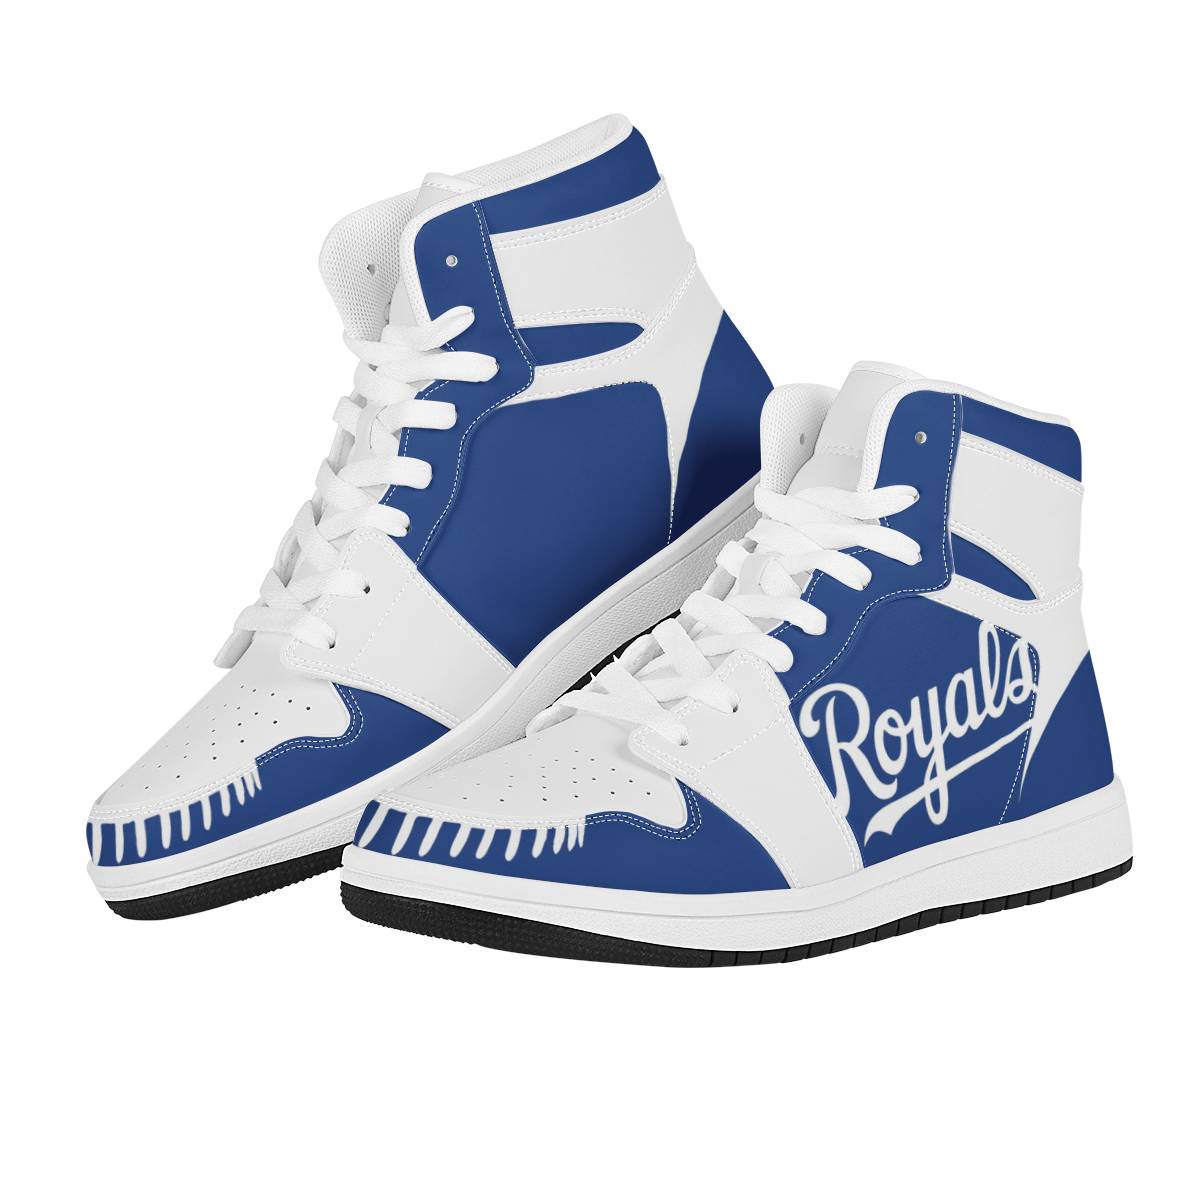 Women's Kansas City Royals High Top Leather AJ1 Sneakers 003